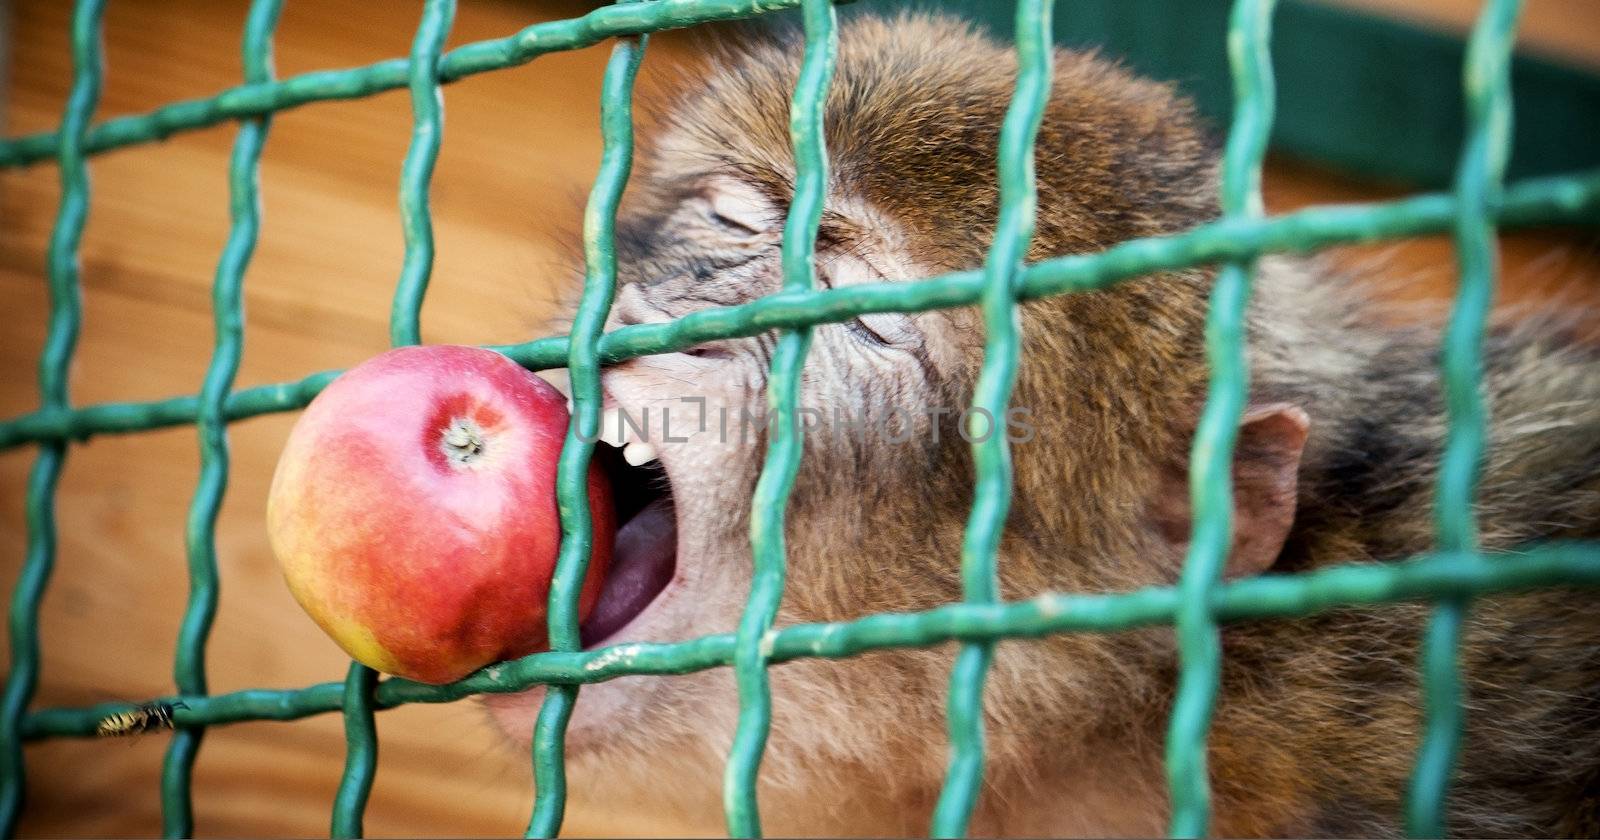 monkey eating an apple behind bars